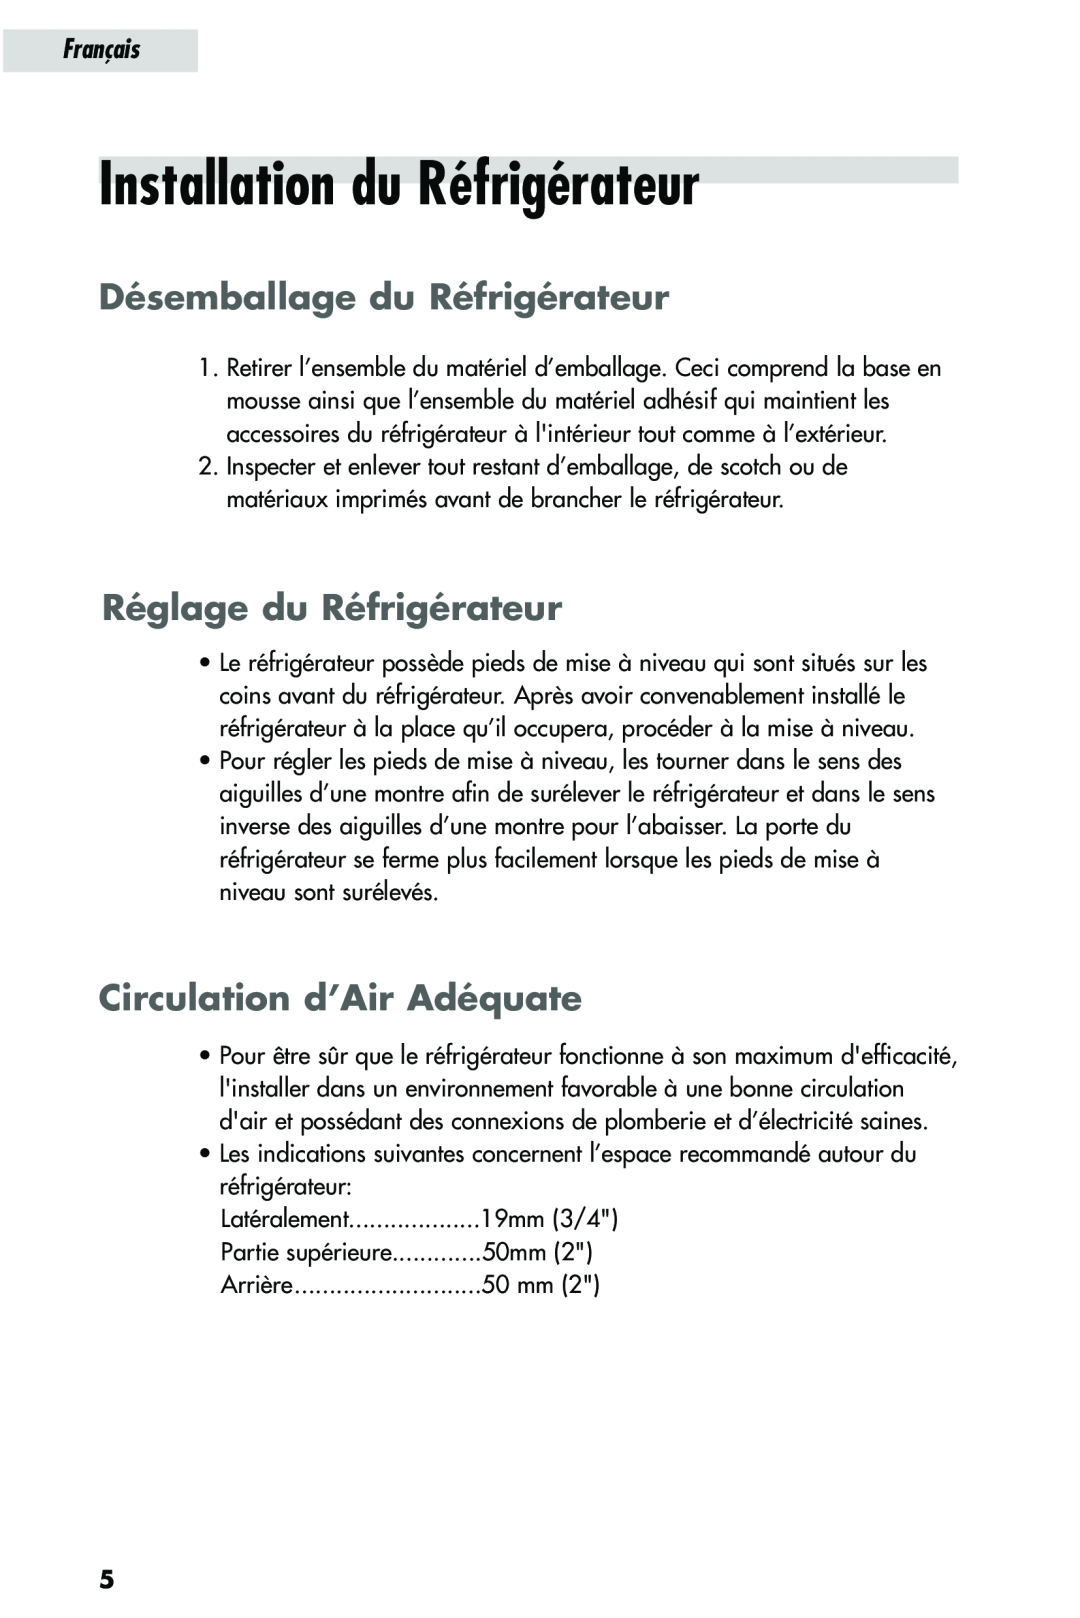 Haier HRQ03WNA, HRQ02WNA Installation du Réfrigérateur, Désemballage du Réfrigérateur, Réglage du Réfrigérateur, Français 